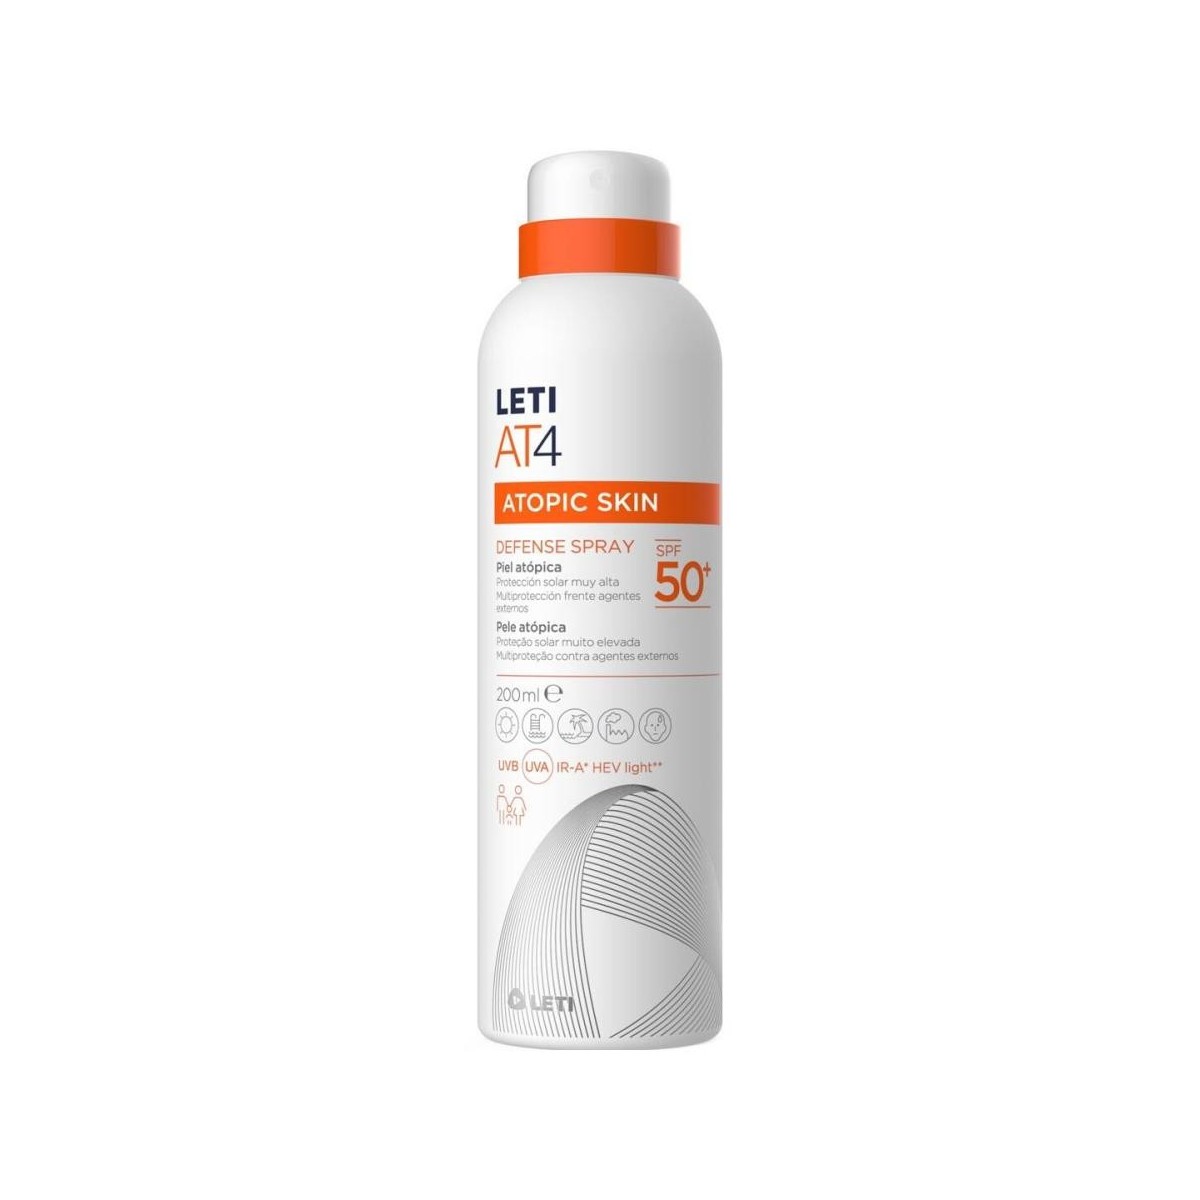 leti-at4-defense-spray-200-ml